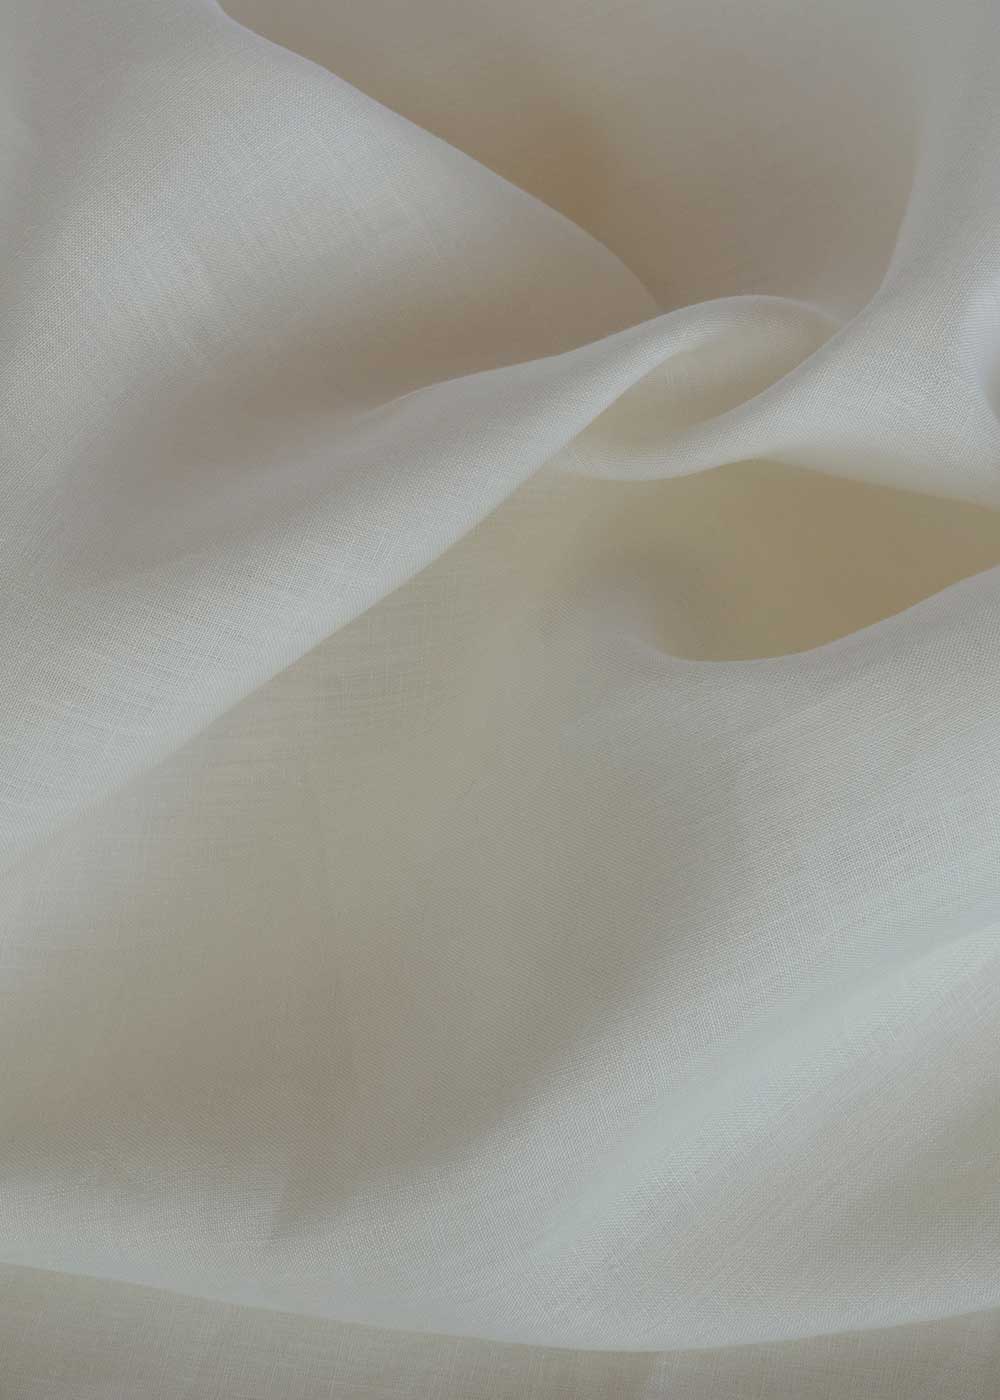 softly crumpled white fabric